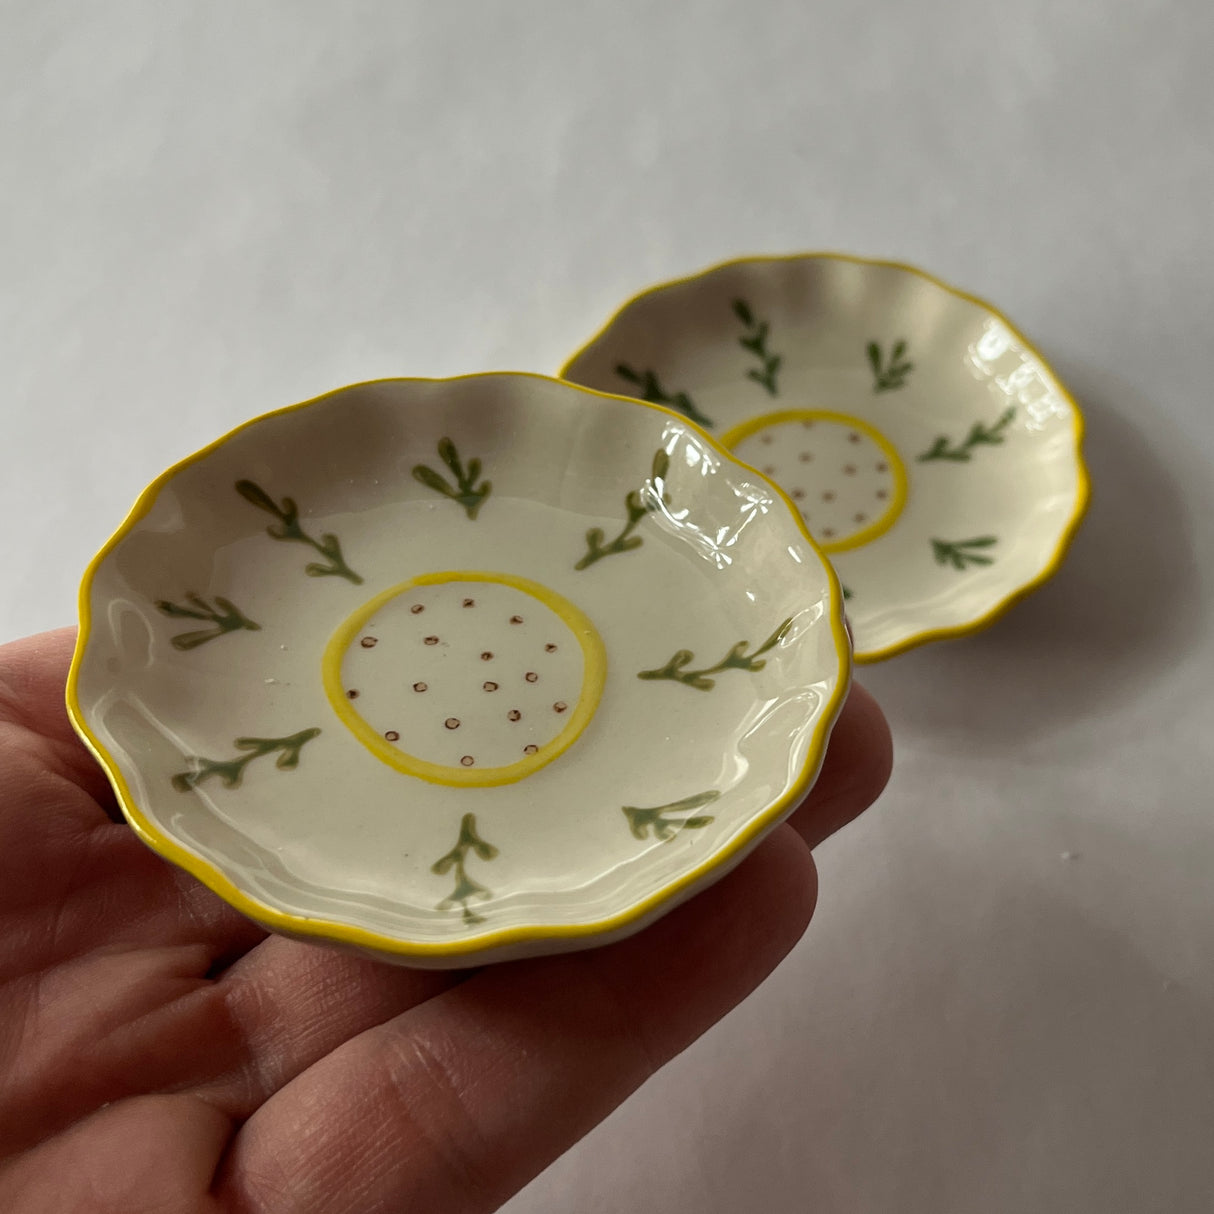 Petite Flower Ceramic Accent Dishes, Set of 2